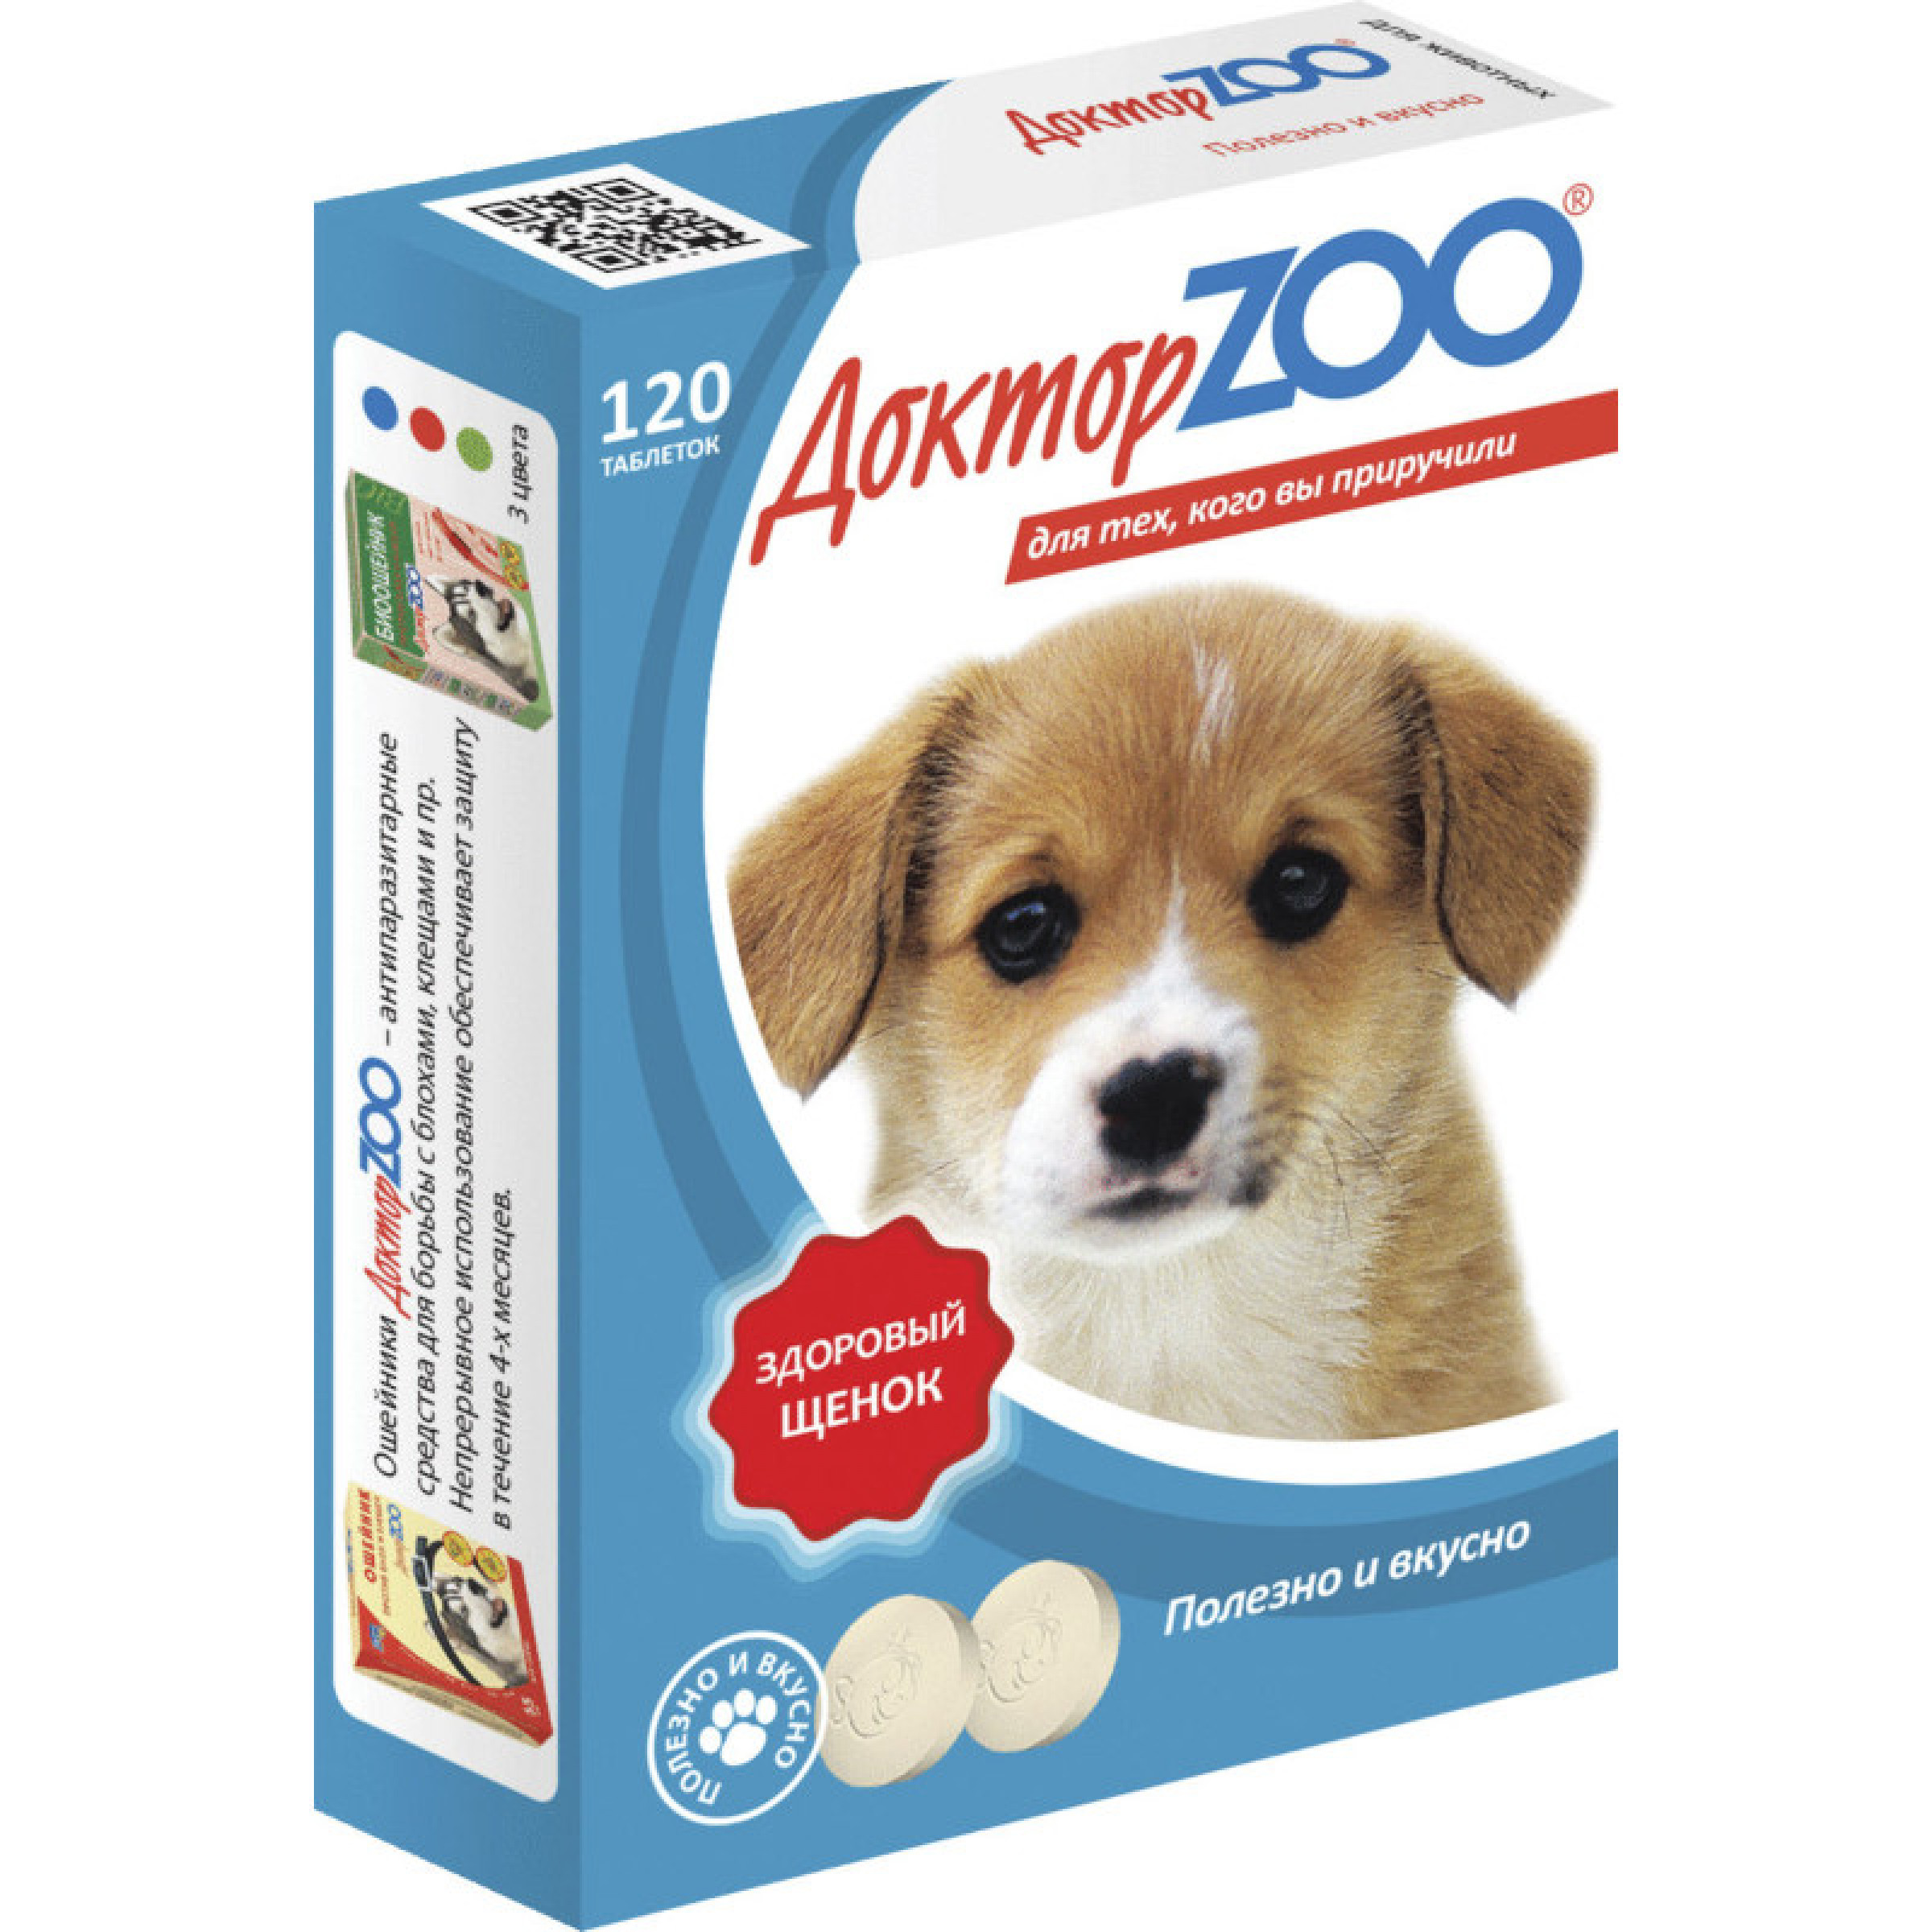 Витамины Доктор Zoo Здоровый щенок, 120 таблеток